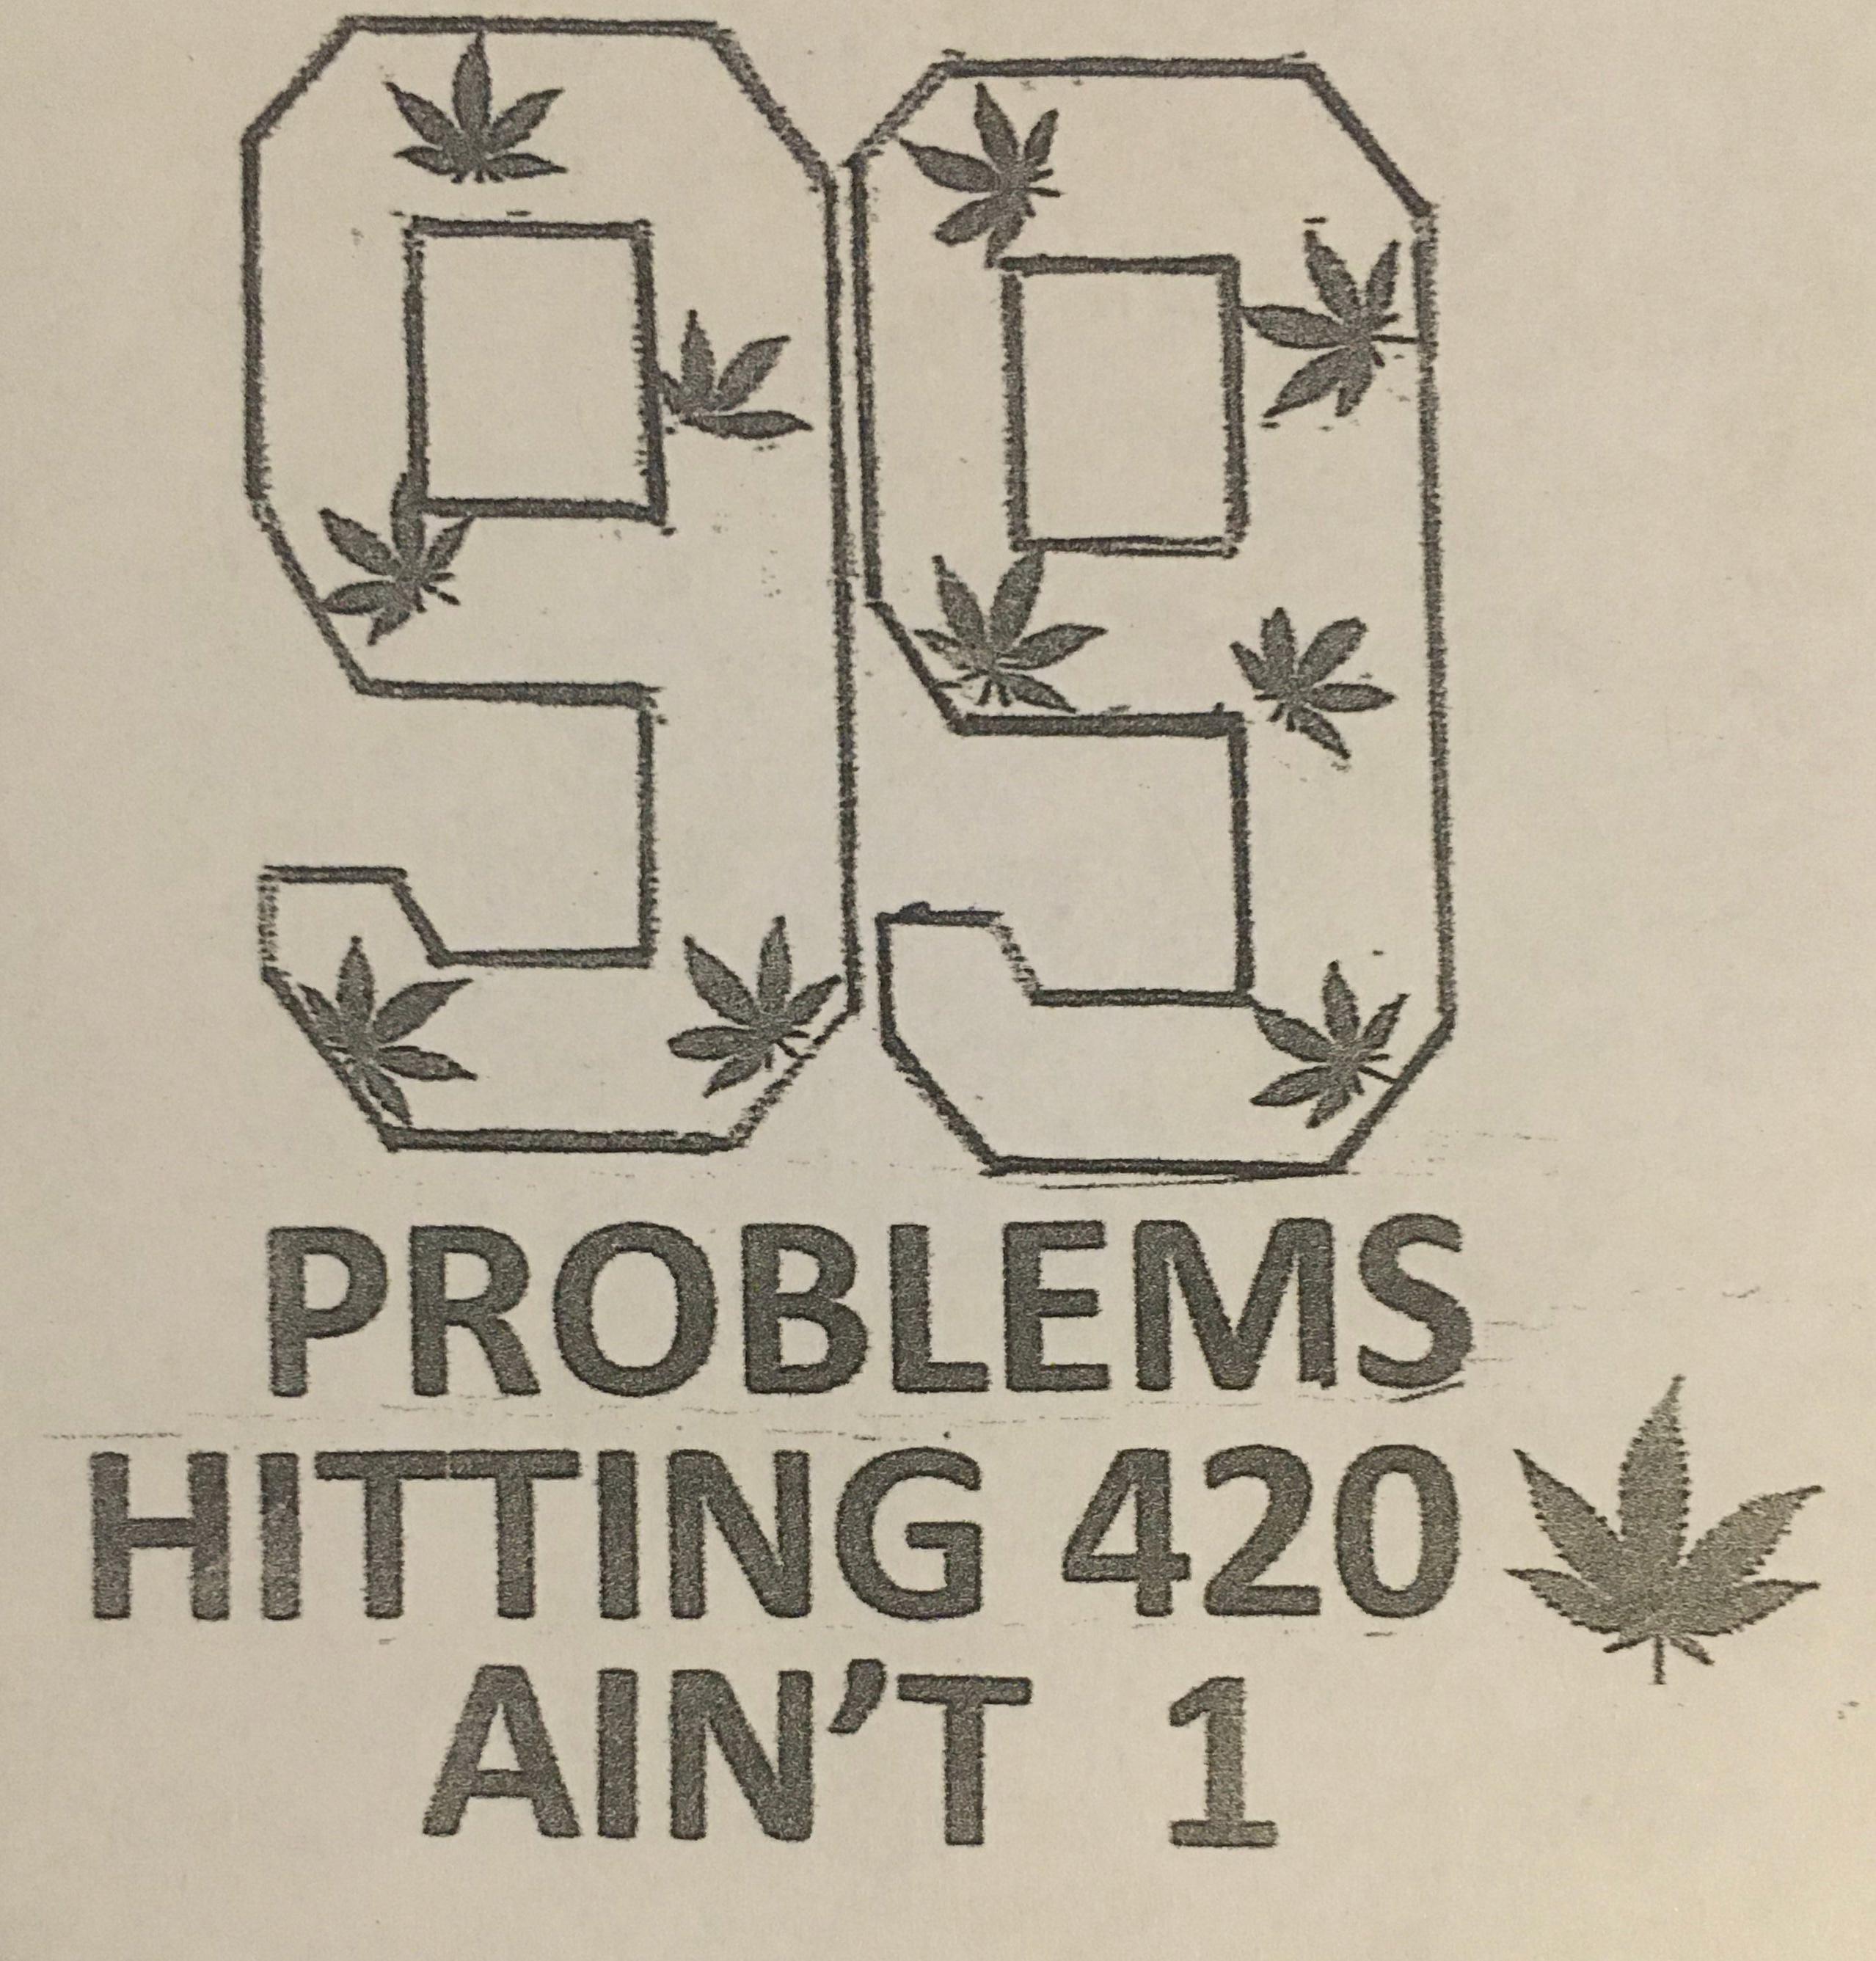  99 PROBLEMS HITTING 420 CANNABIS LEAF AIN'T 1